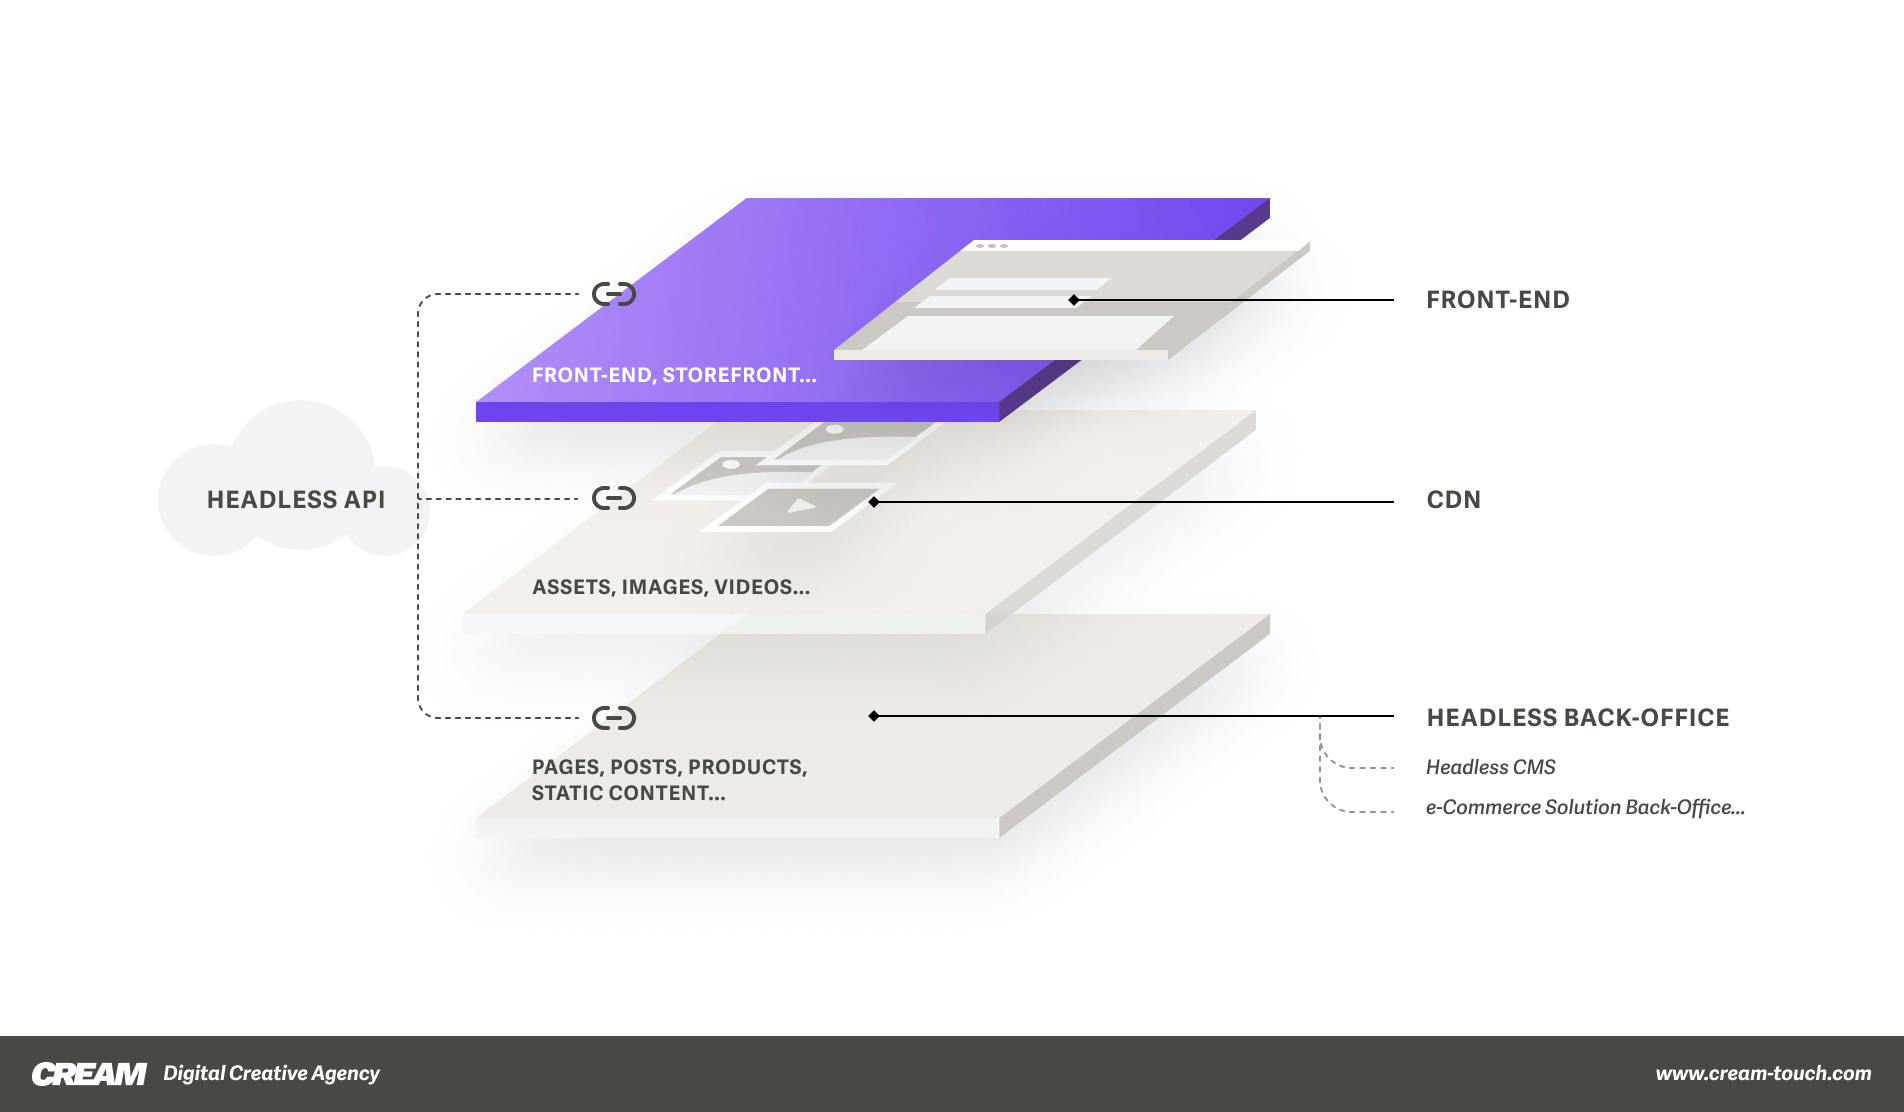 CREAM Headless solution architecture diagram simplified